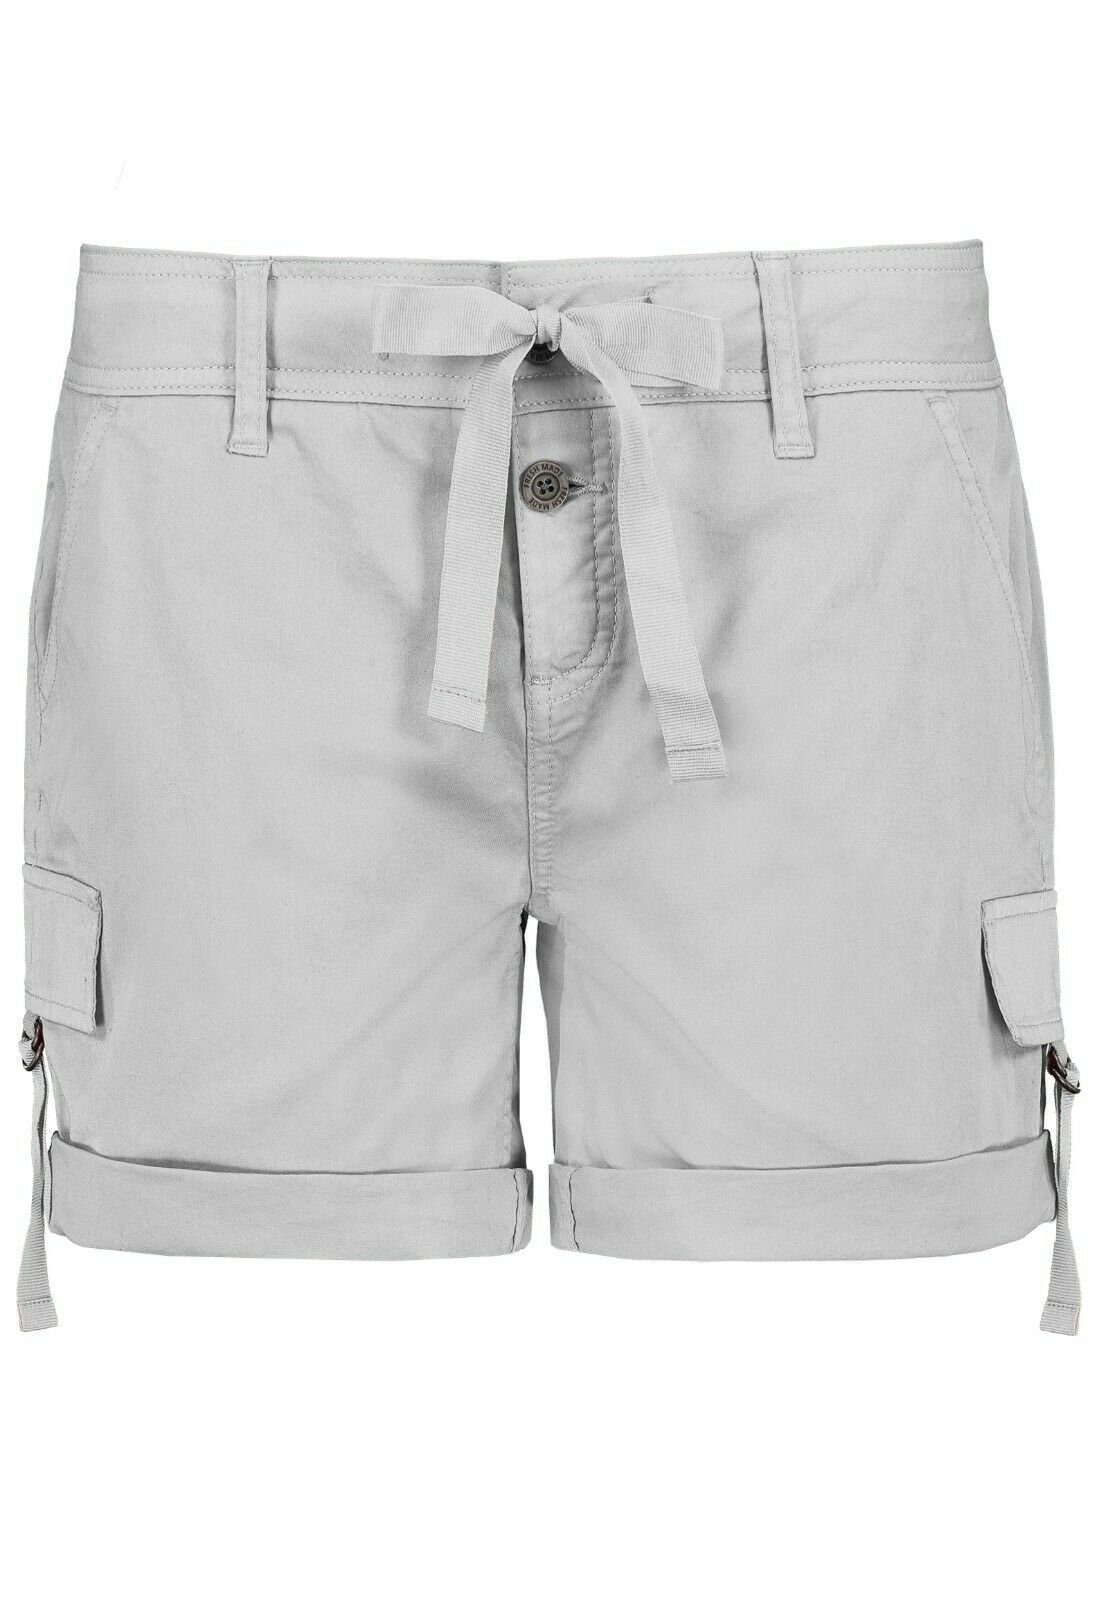 Fresh Made Bermudas Shorts Bermuda Kurze Hose Short Hotpants Sommer Grau